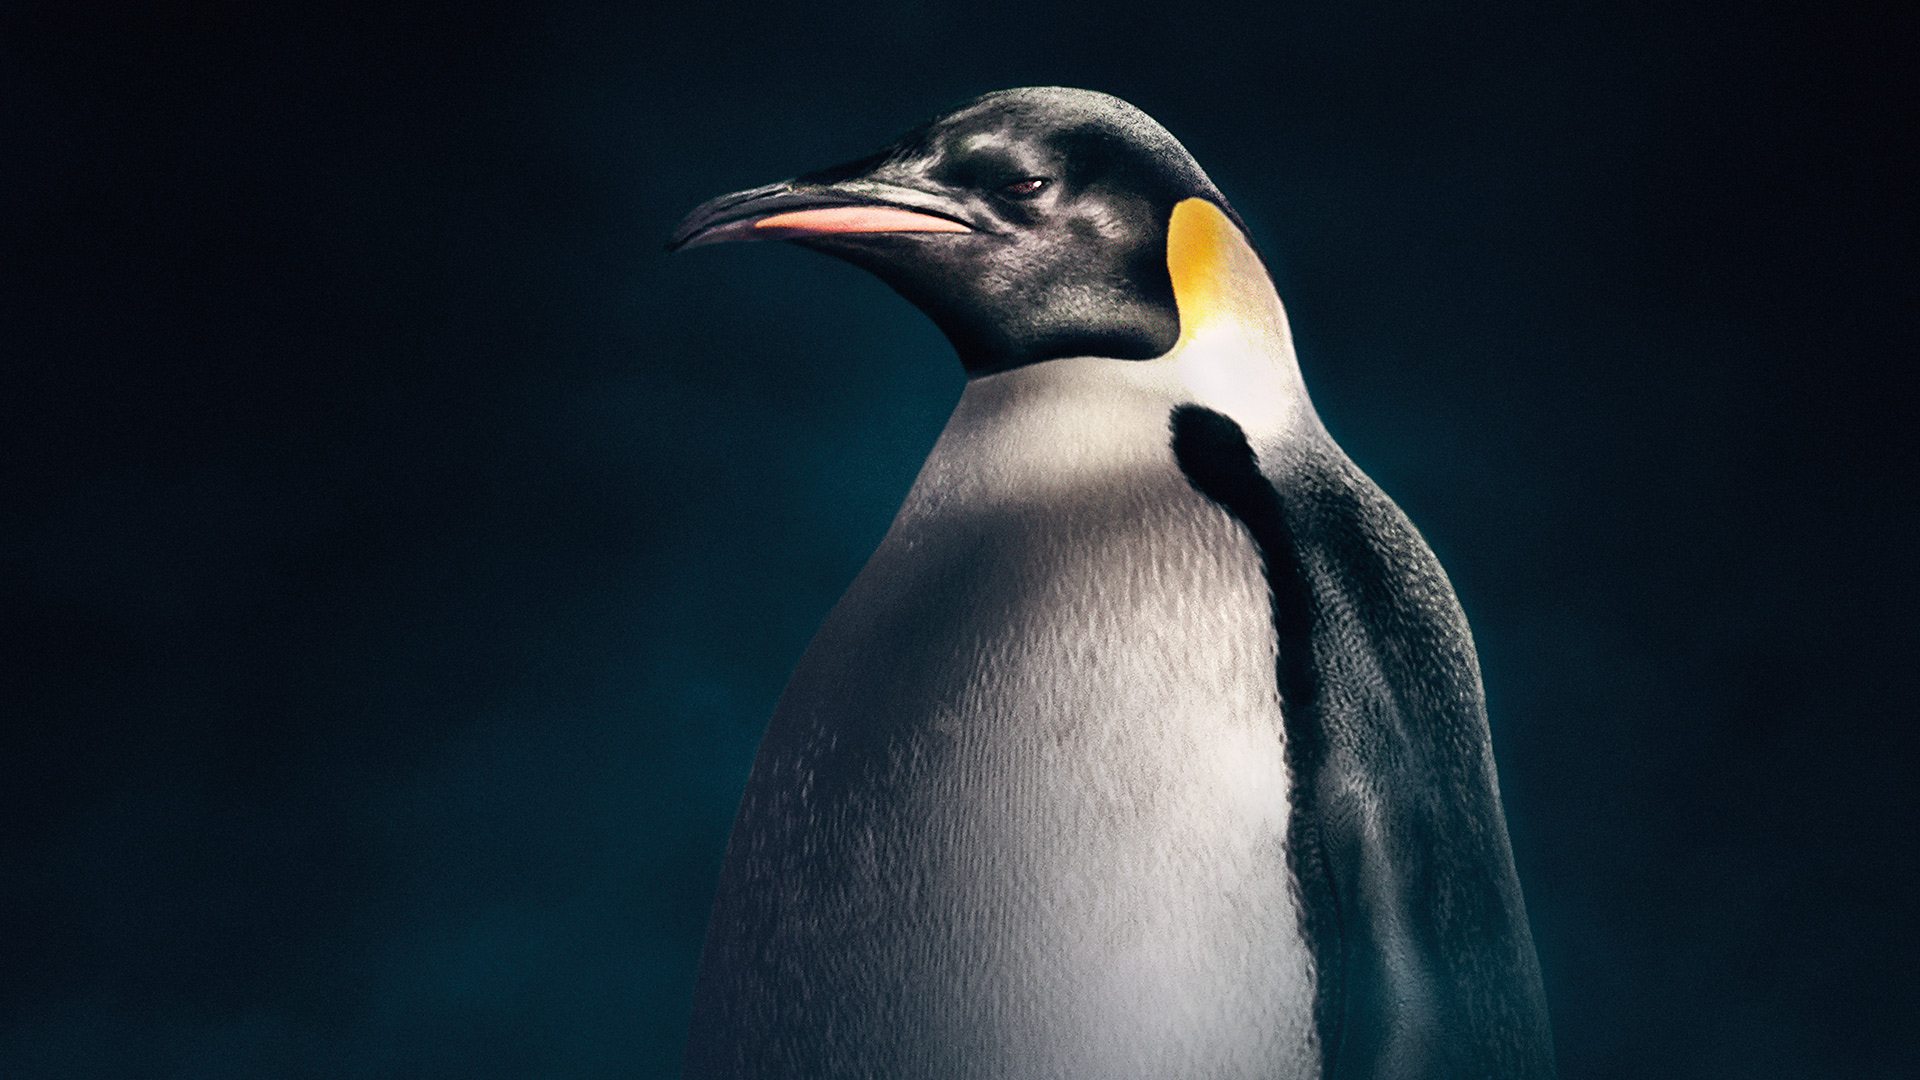 Farnham penguin finds 'guide bird' in one of her friends - BBC News